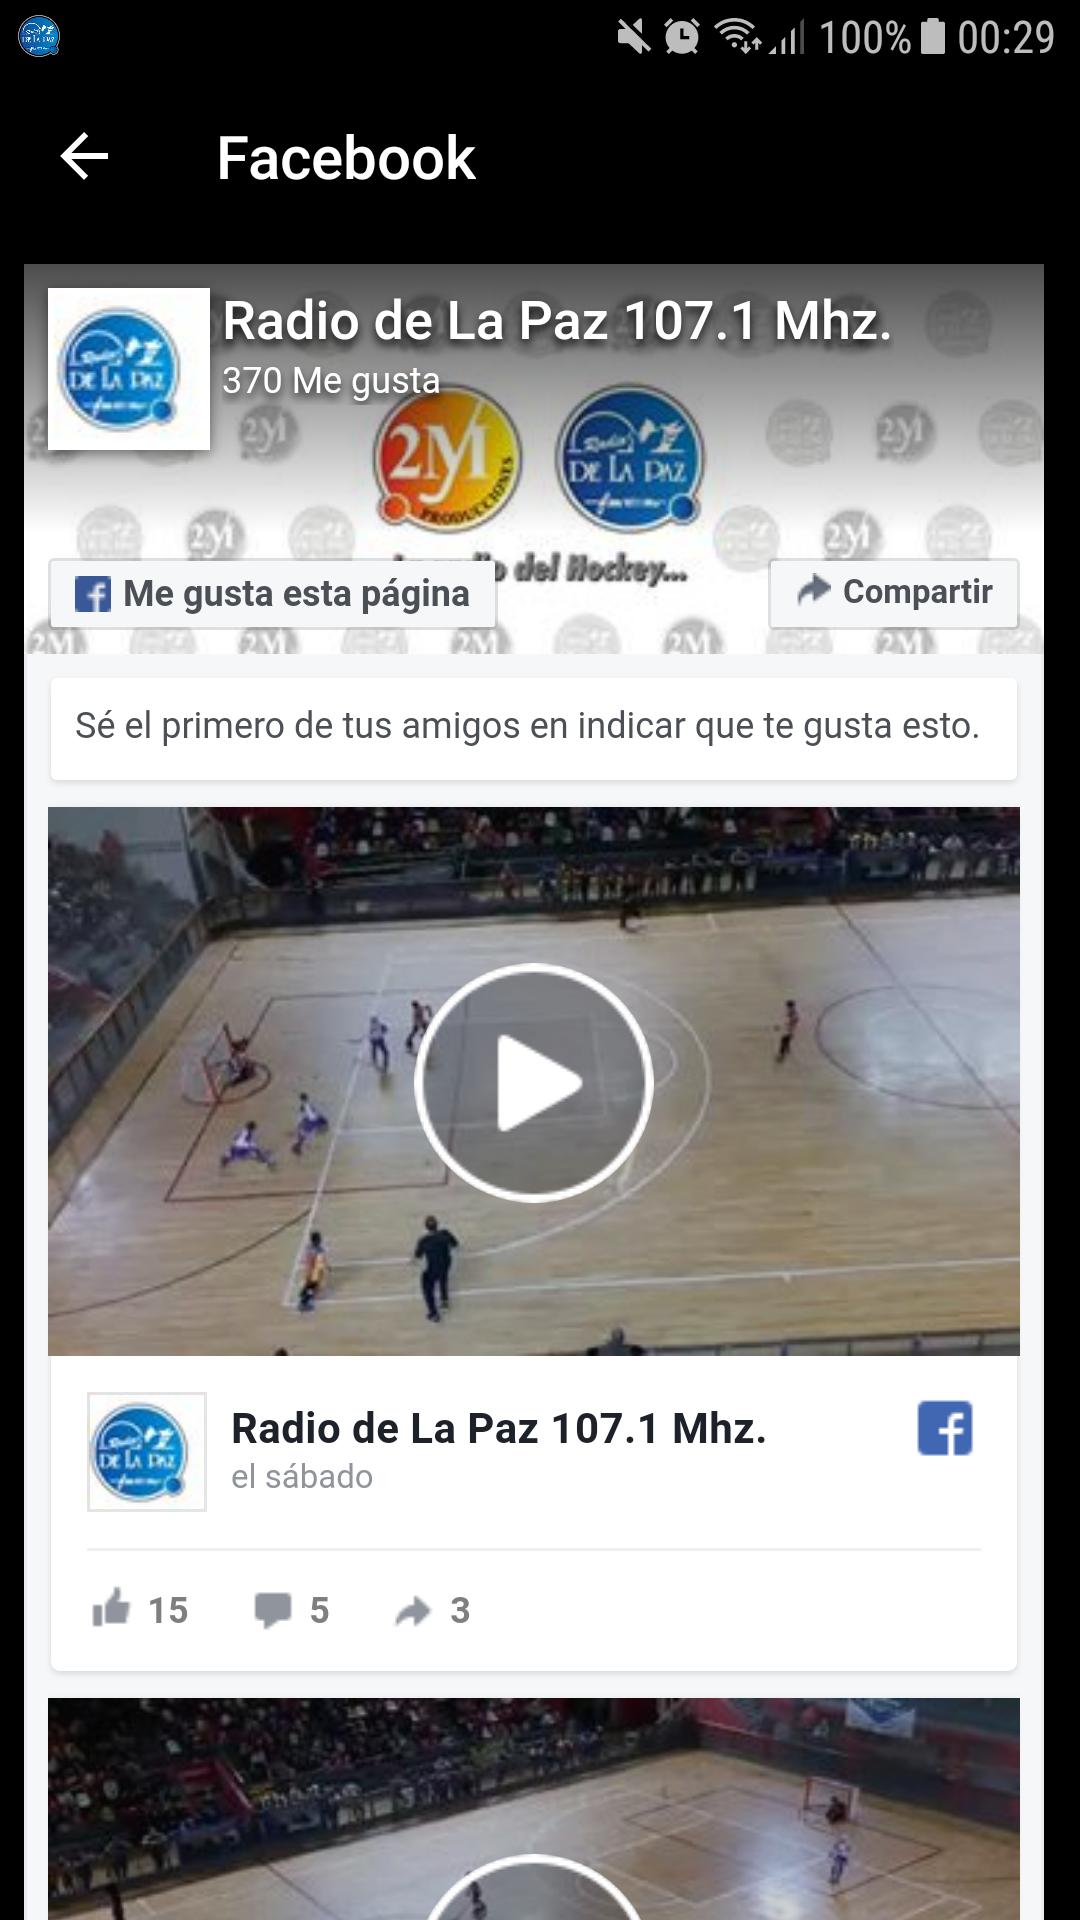 RADIO DE LA PAZ SAN JUAN APK für Android herunterladen